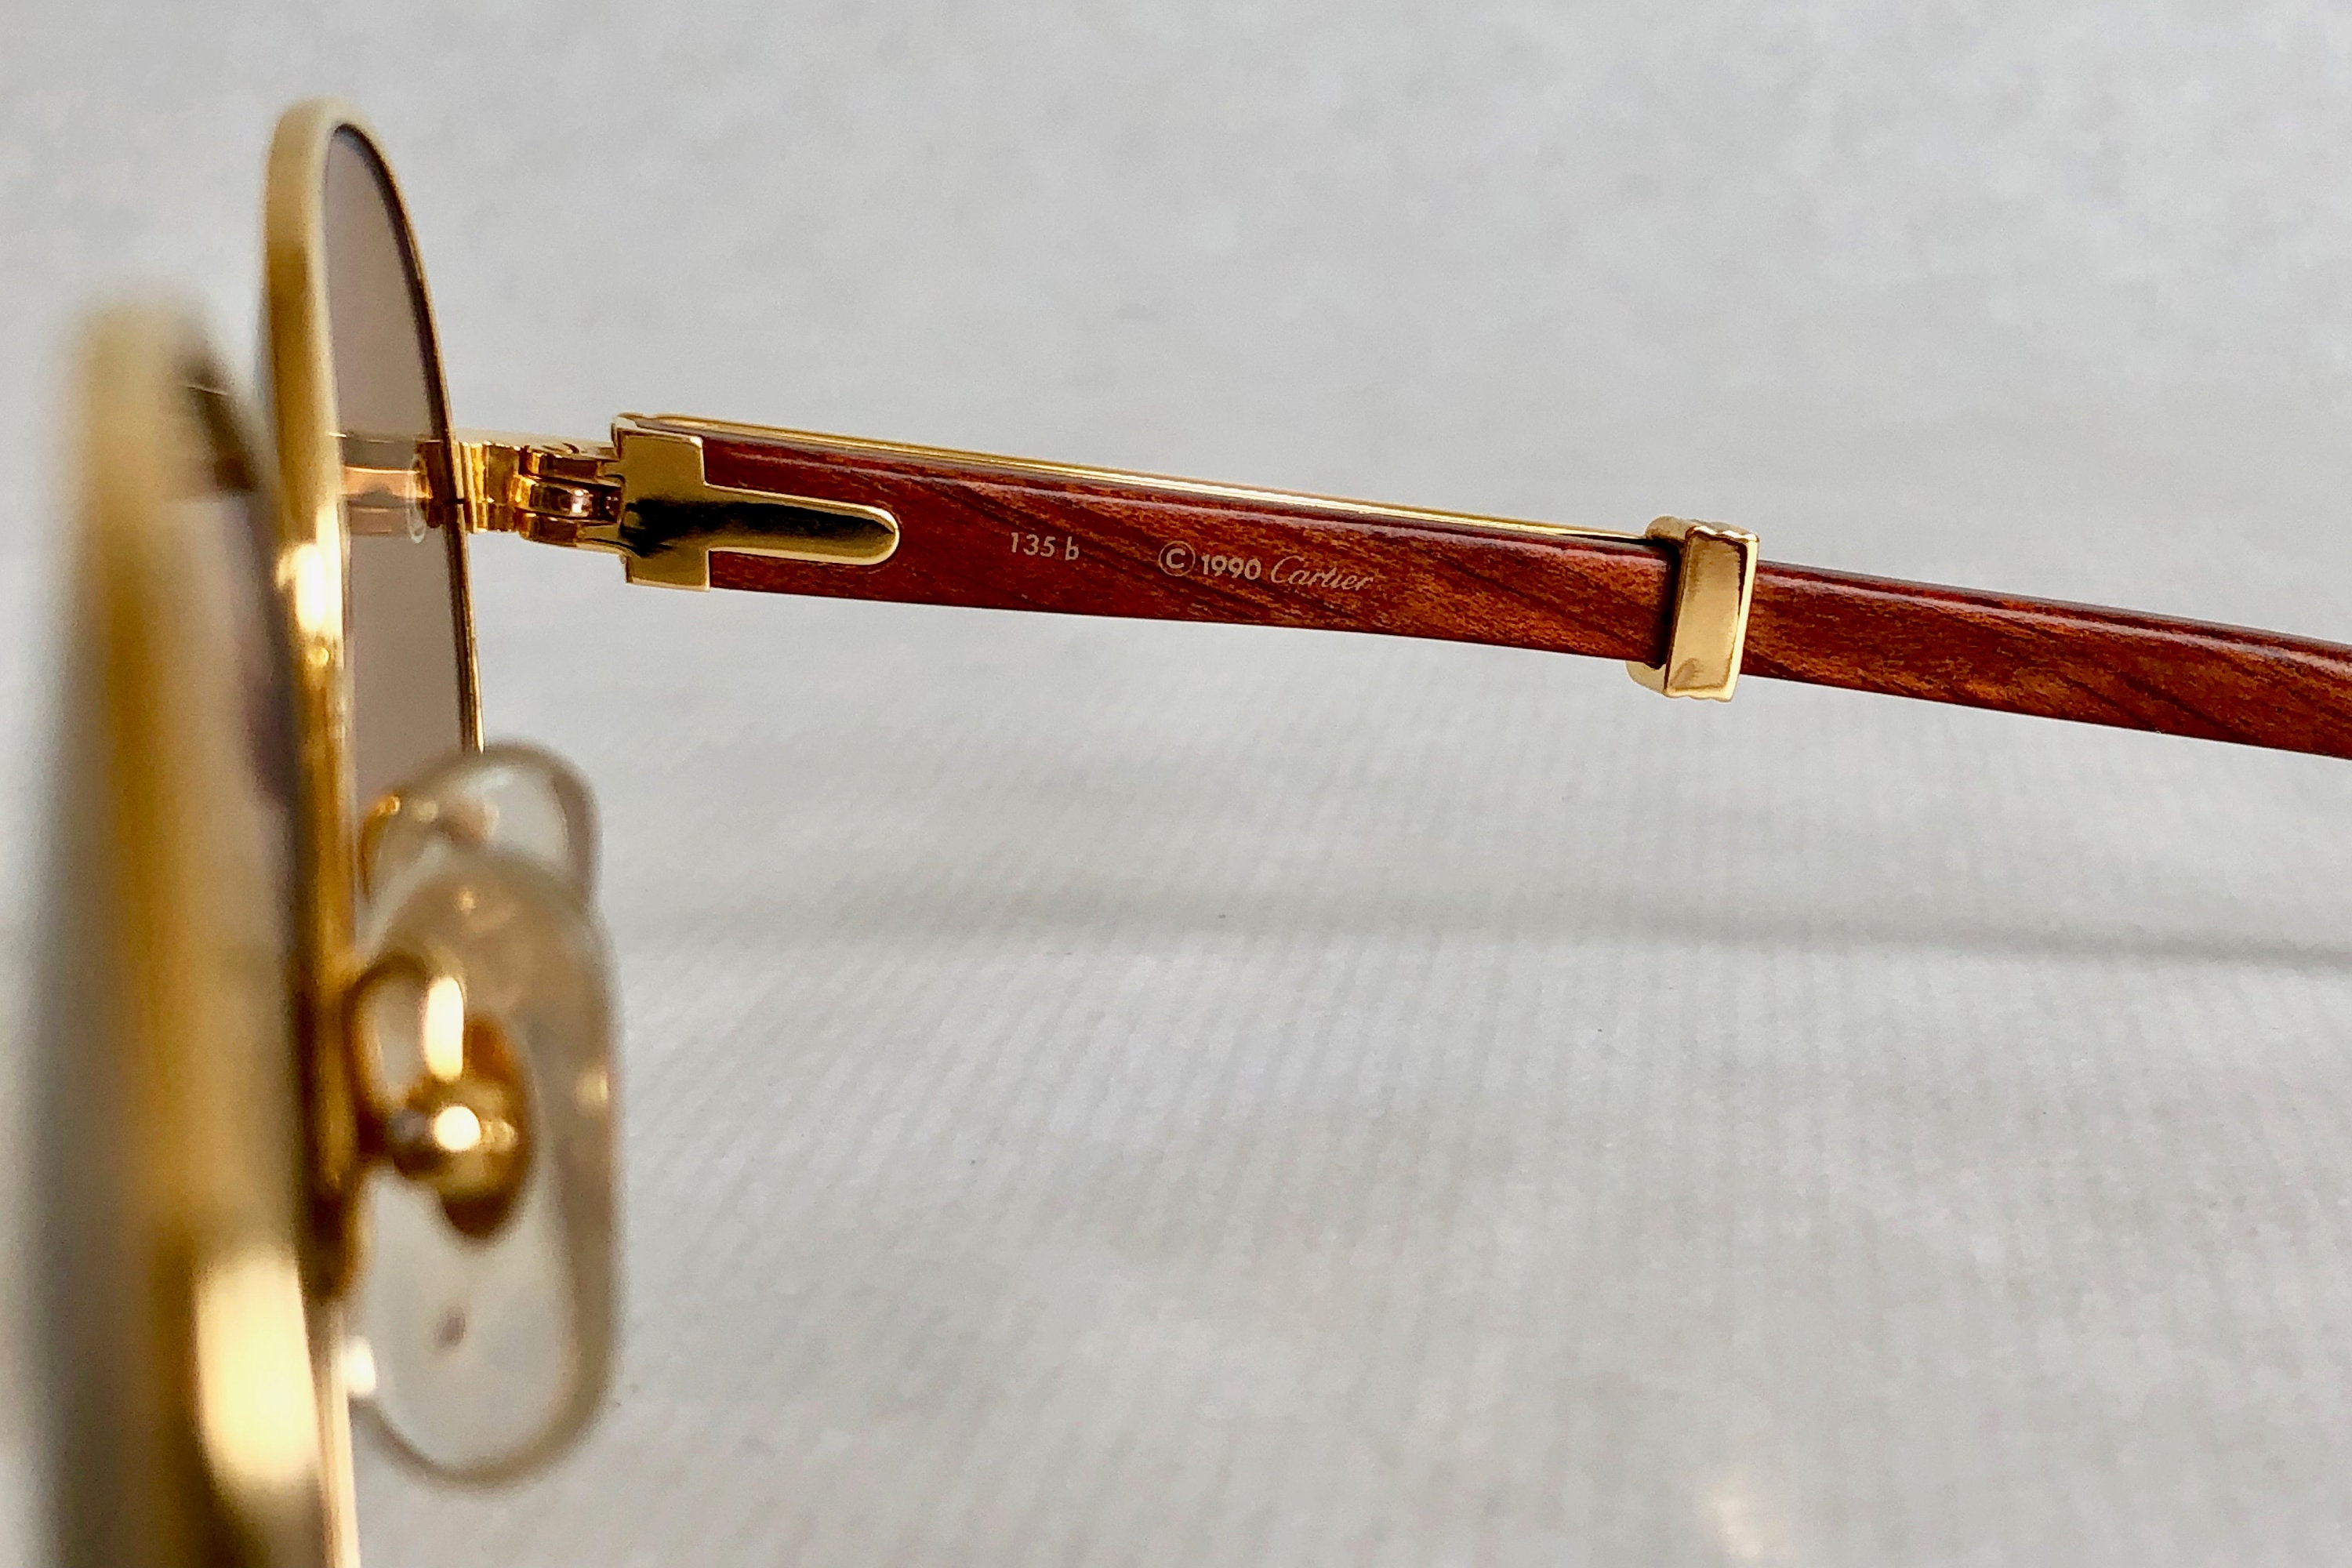 vintage cartier glasses gucci mane